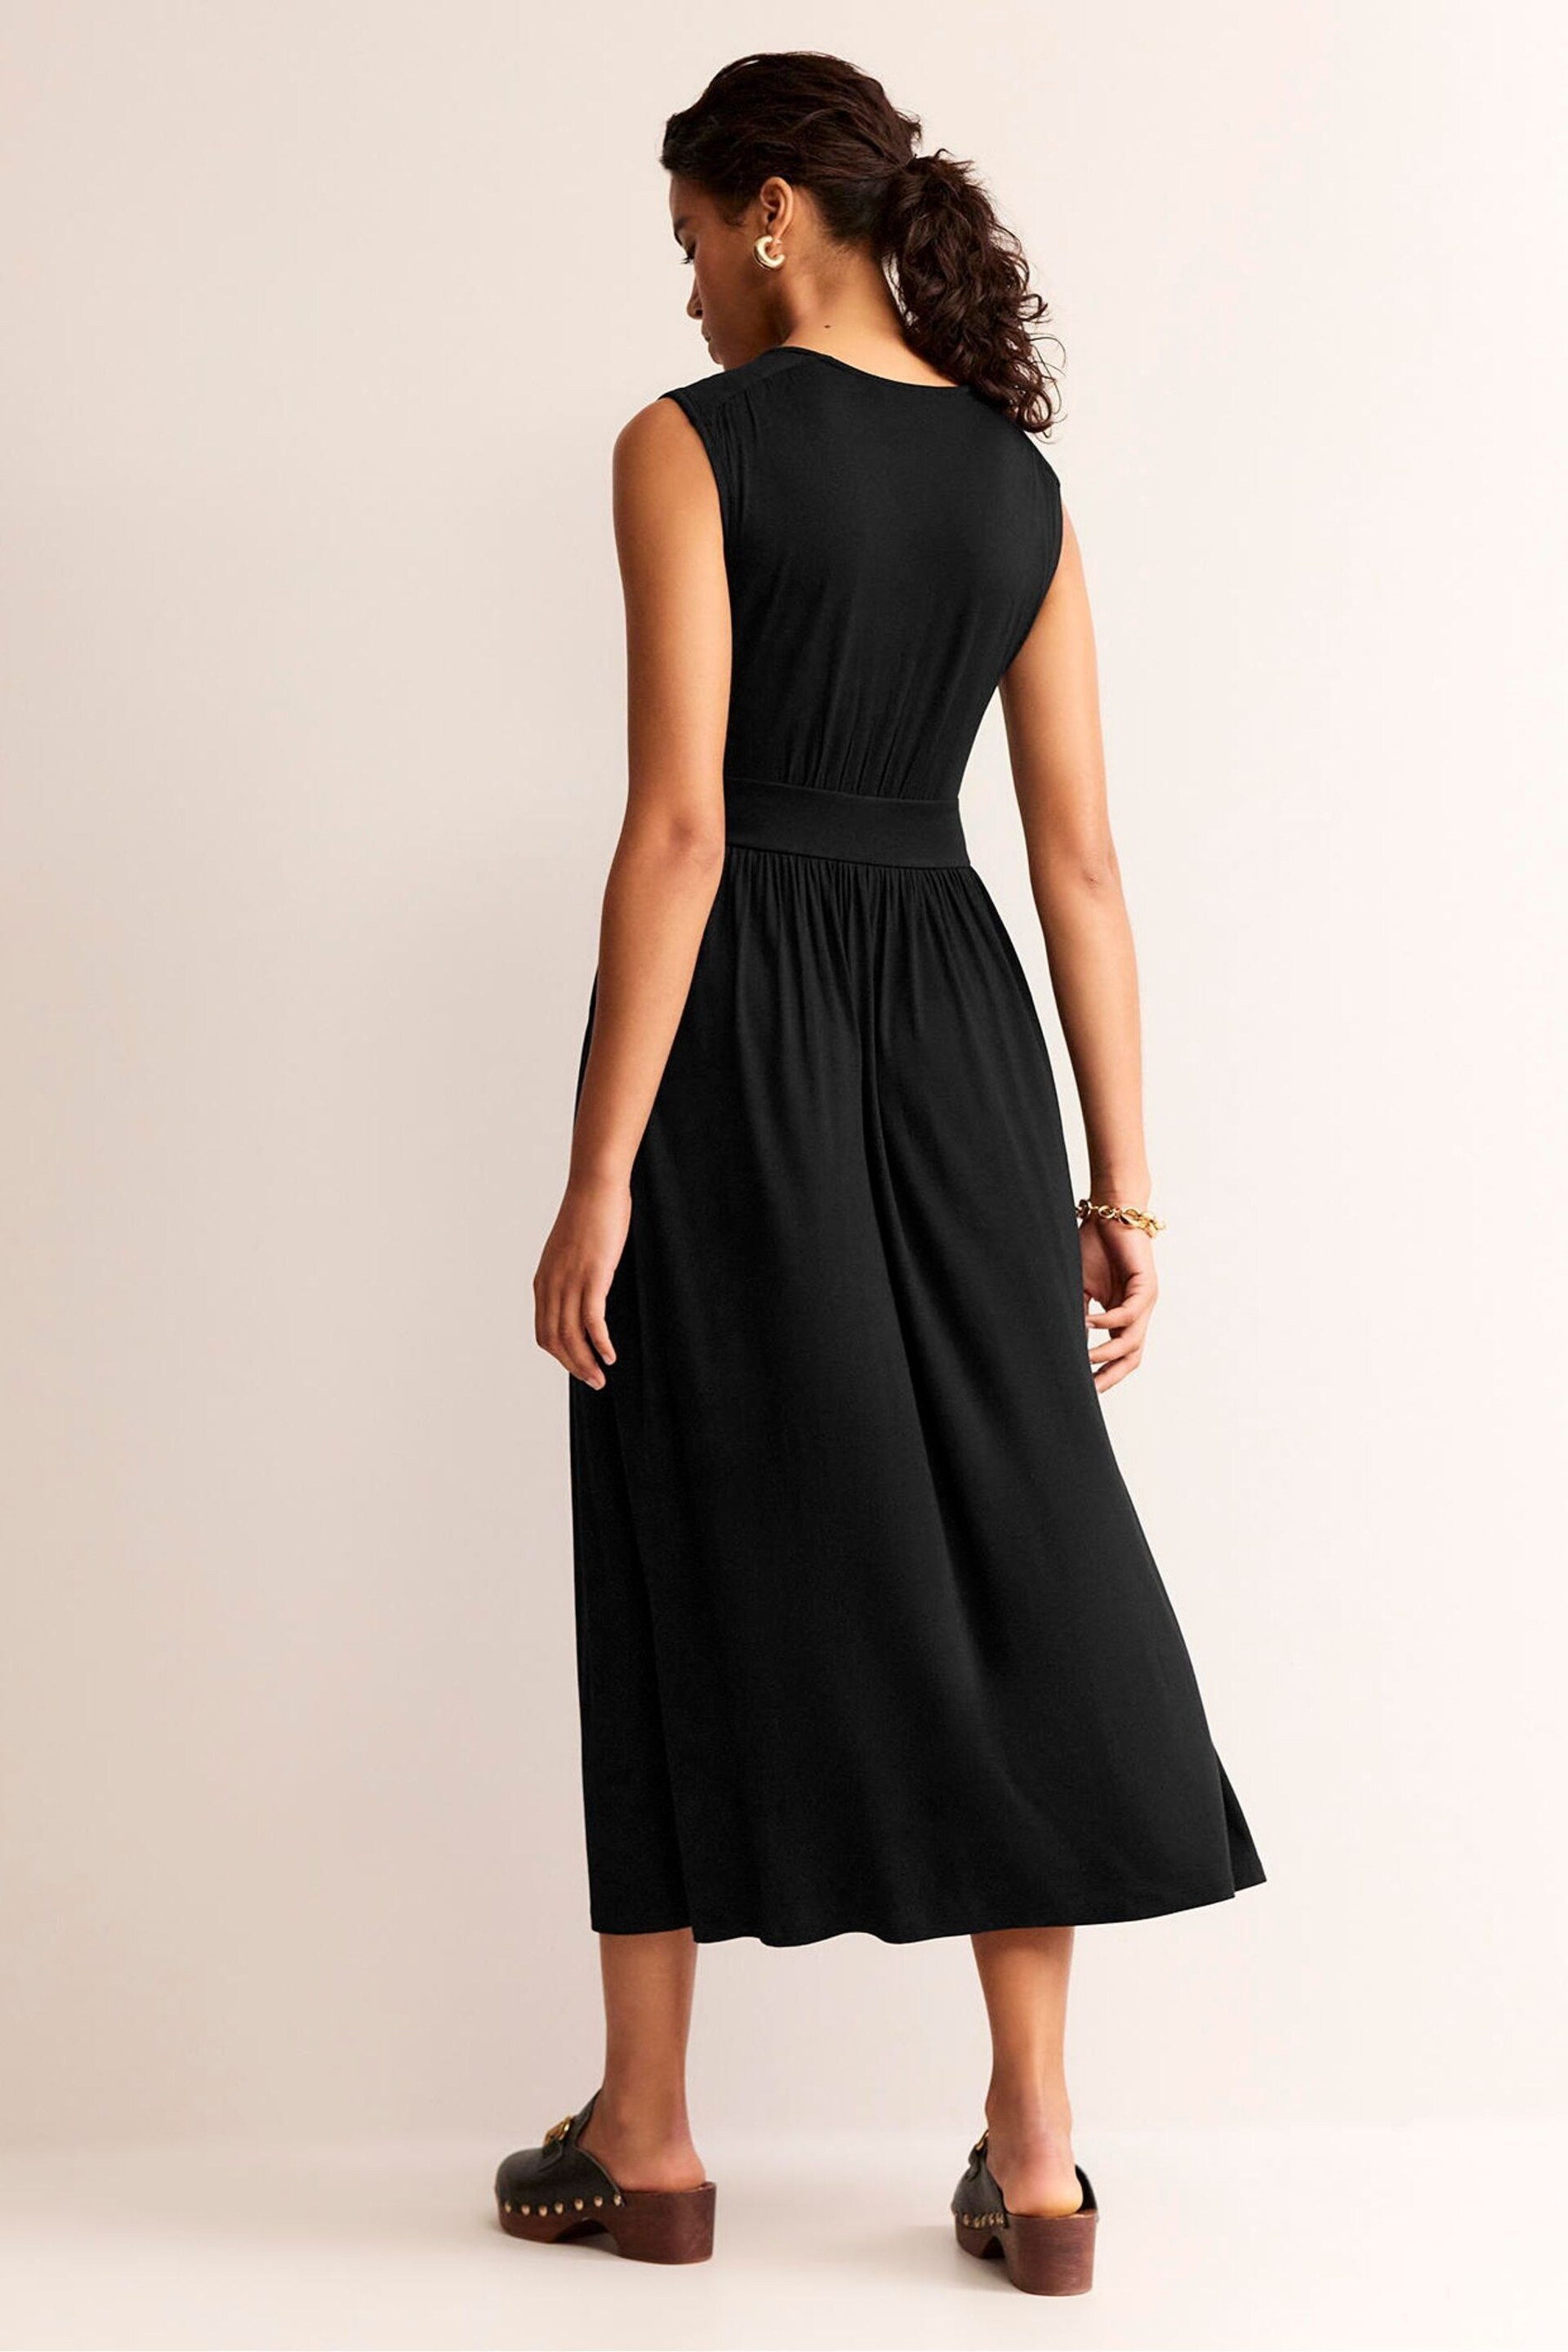 Boden Black Petite Thea Sleeveless Midi Dress - Image 2 of 5